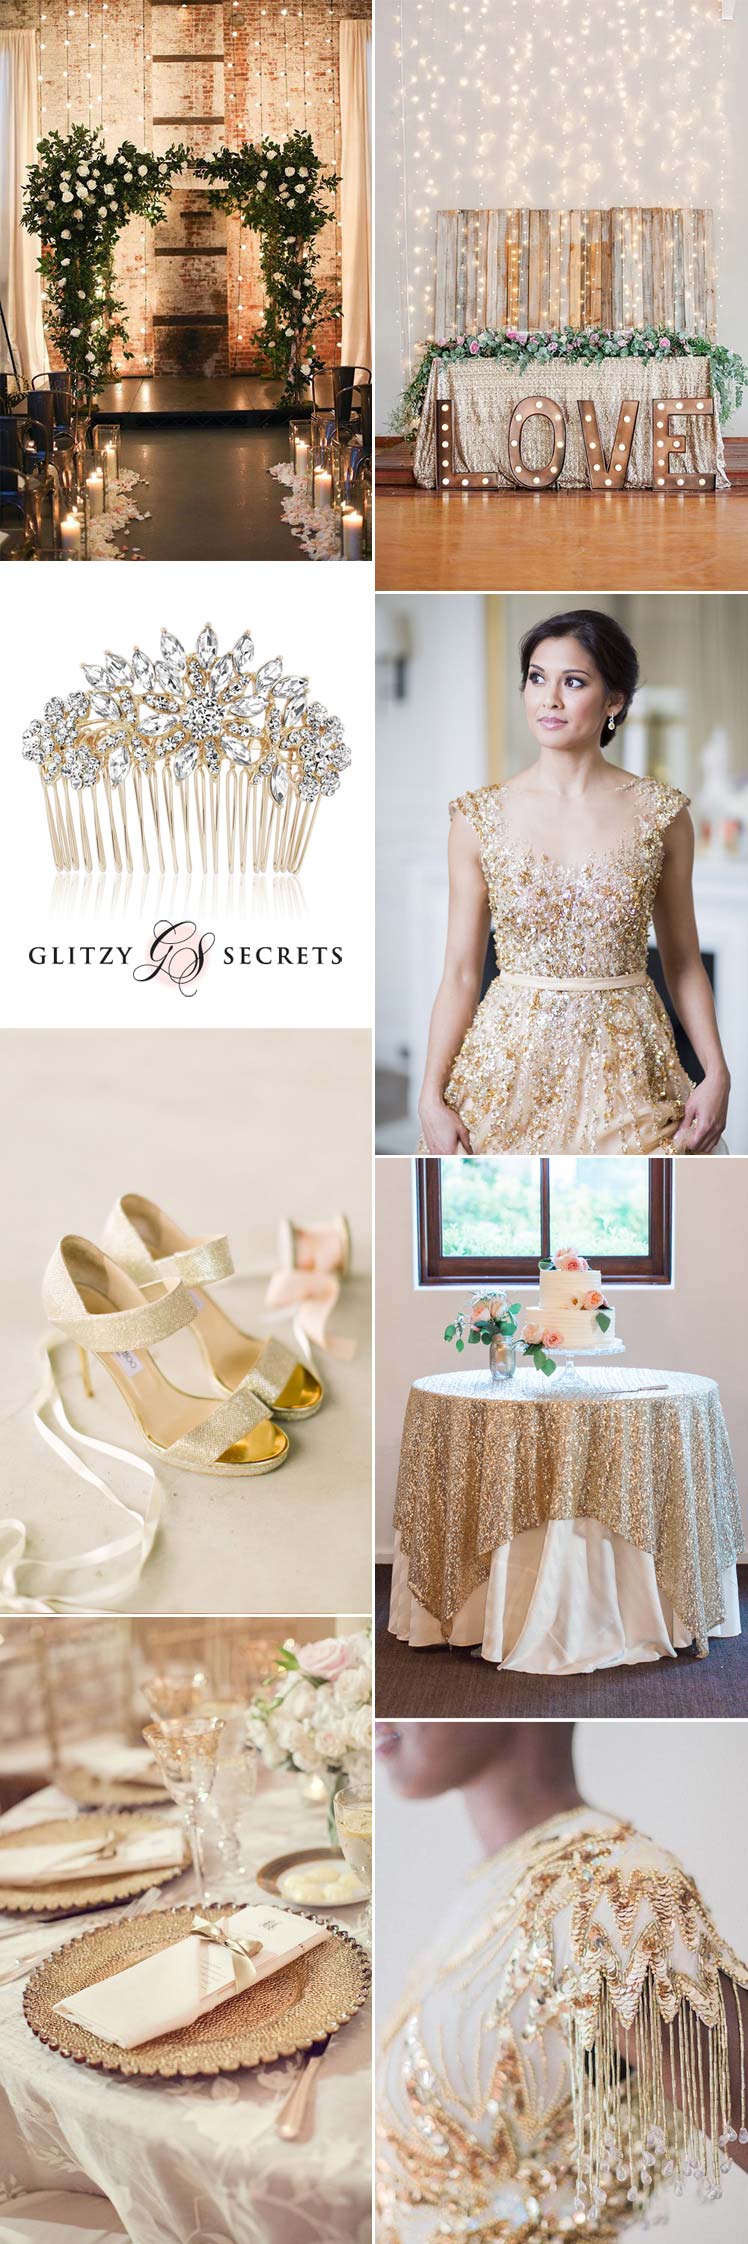 Gold Glitter wedding ideas